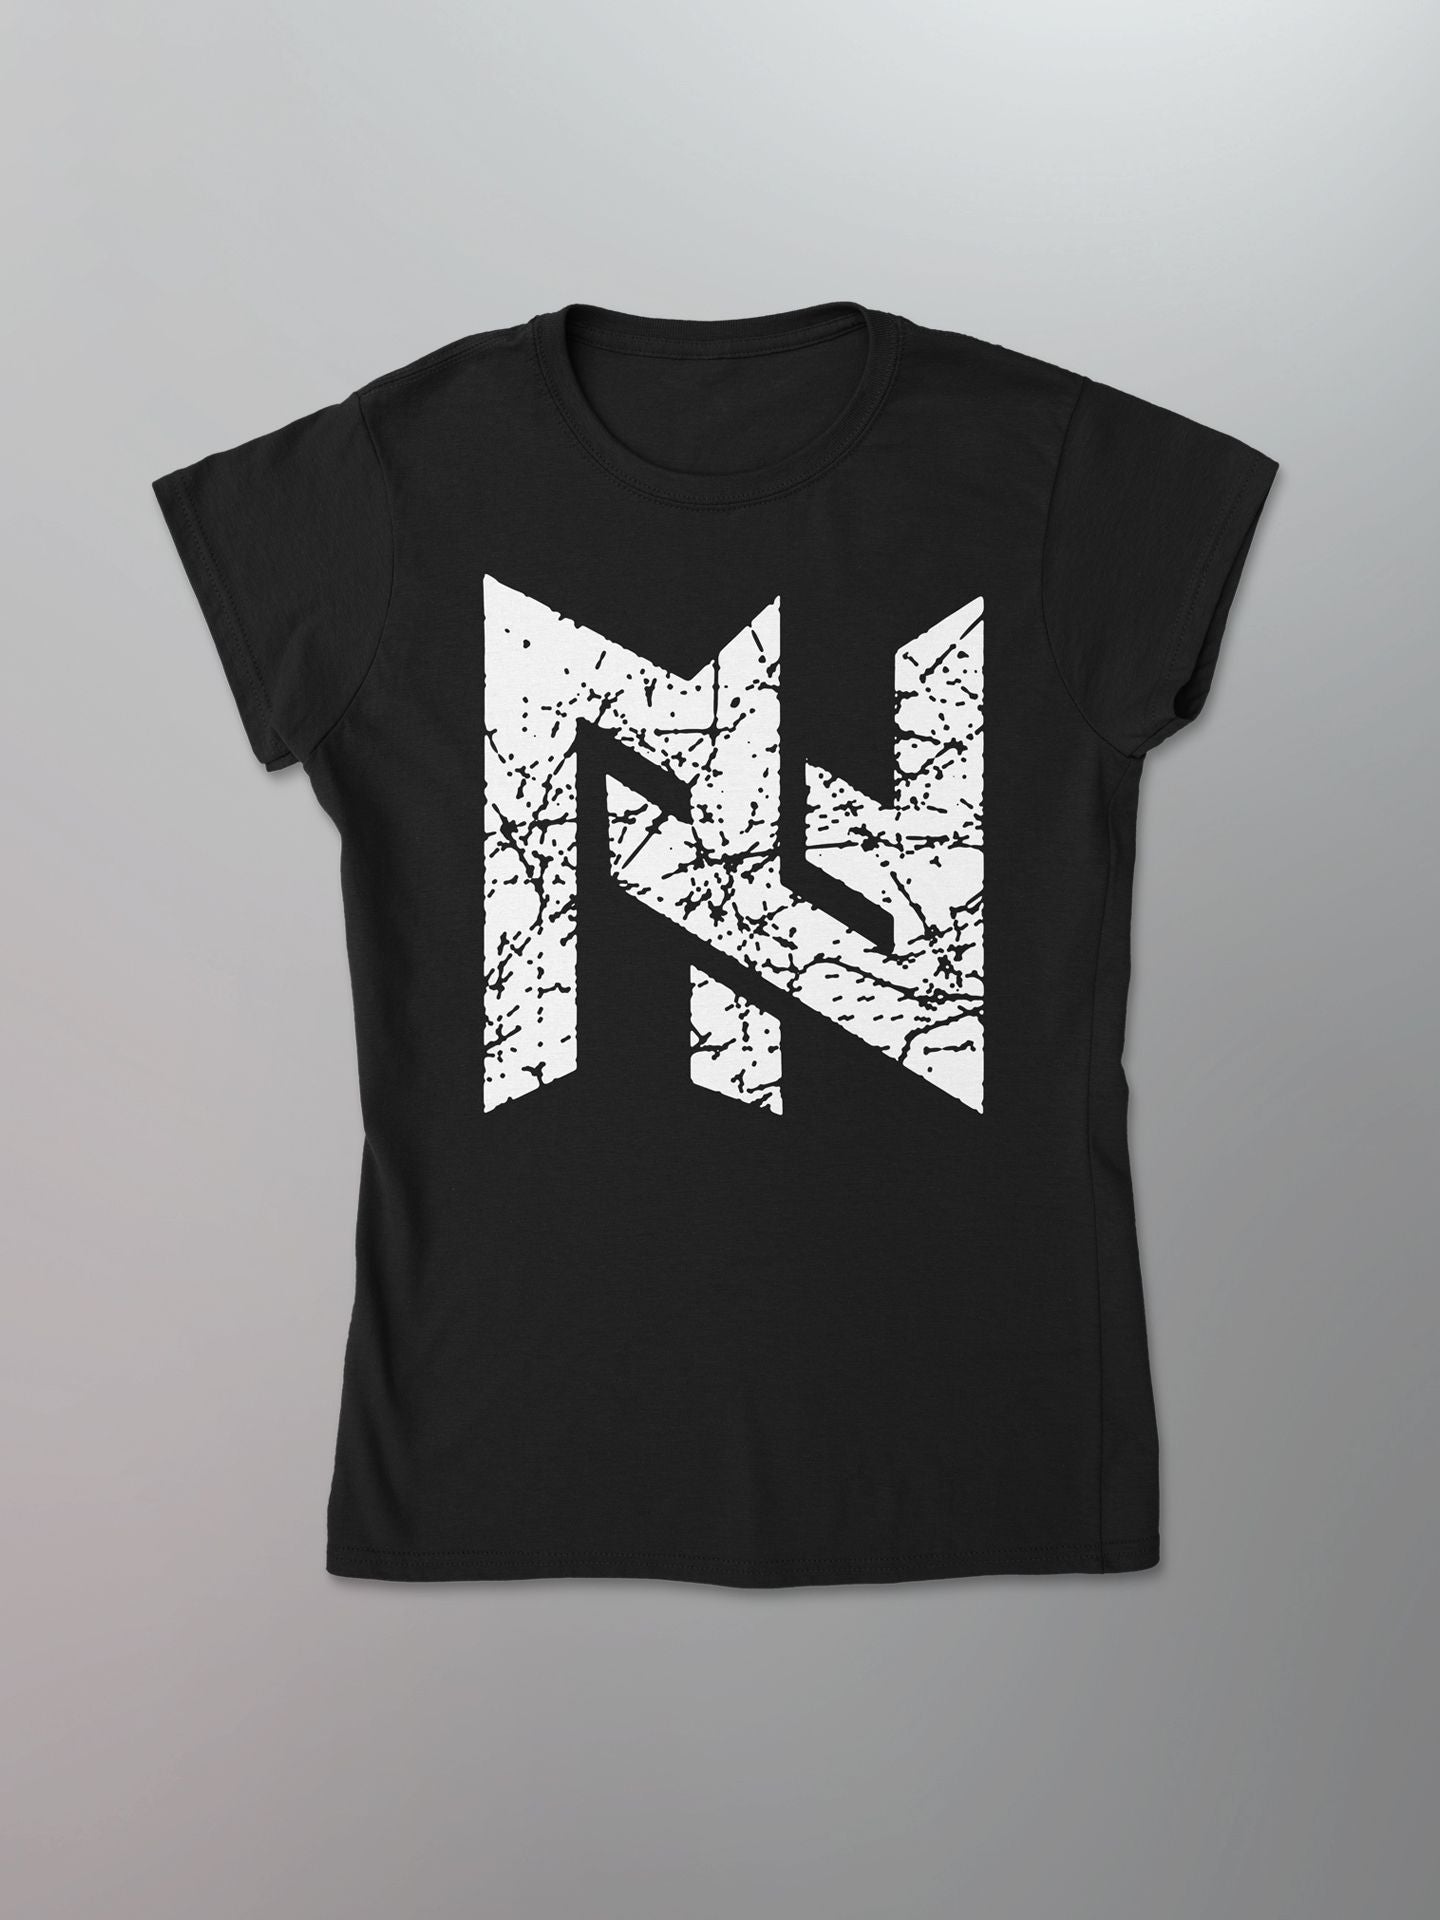 Nitroverts - Cracked Logo Women's Shirt